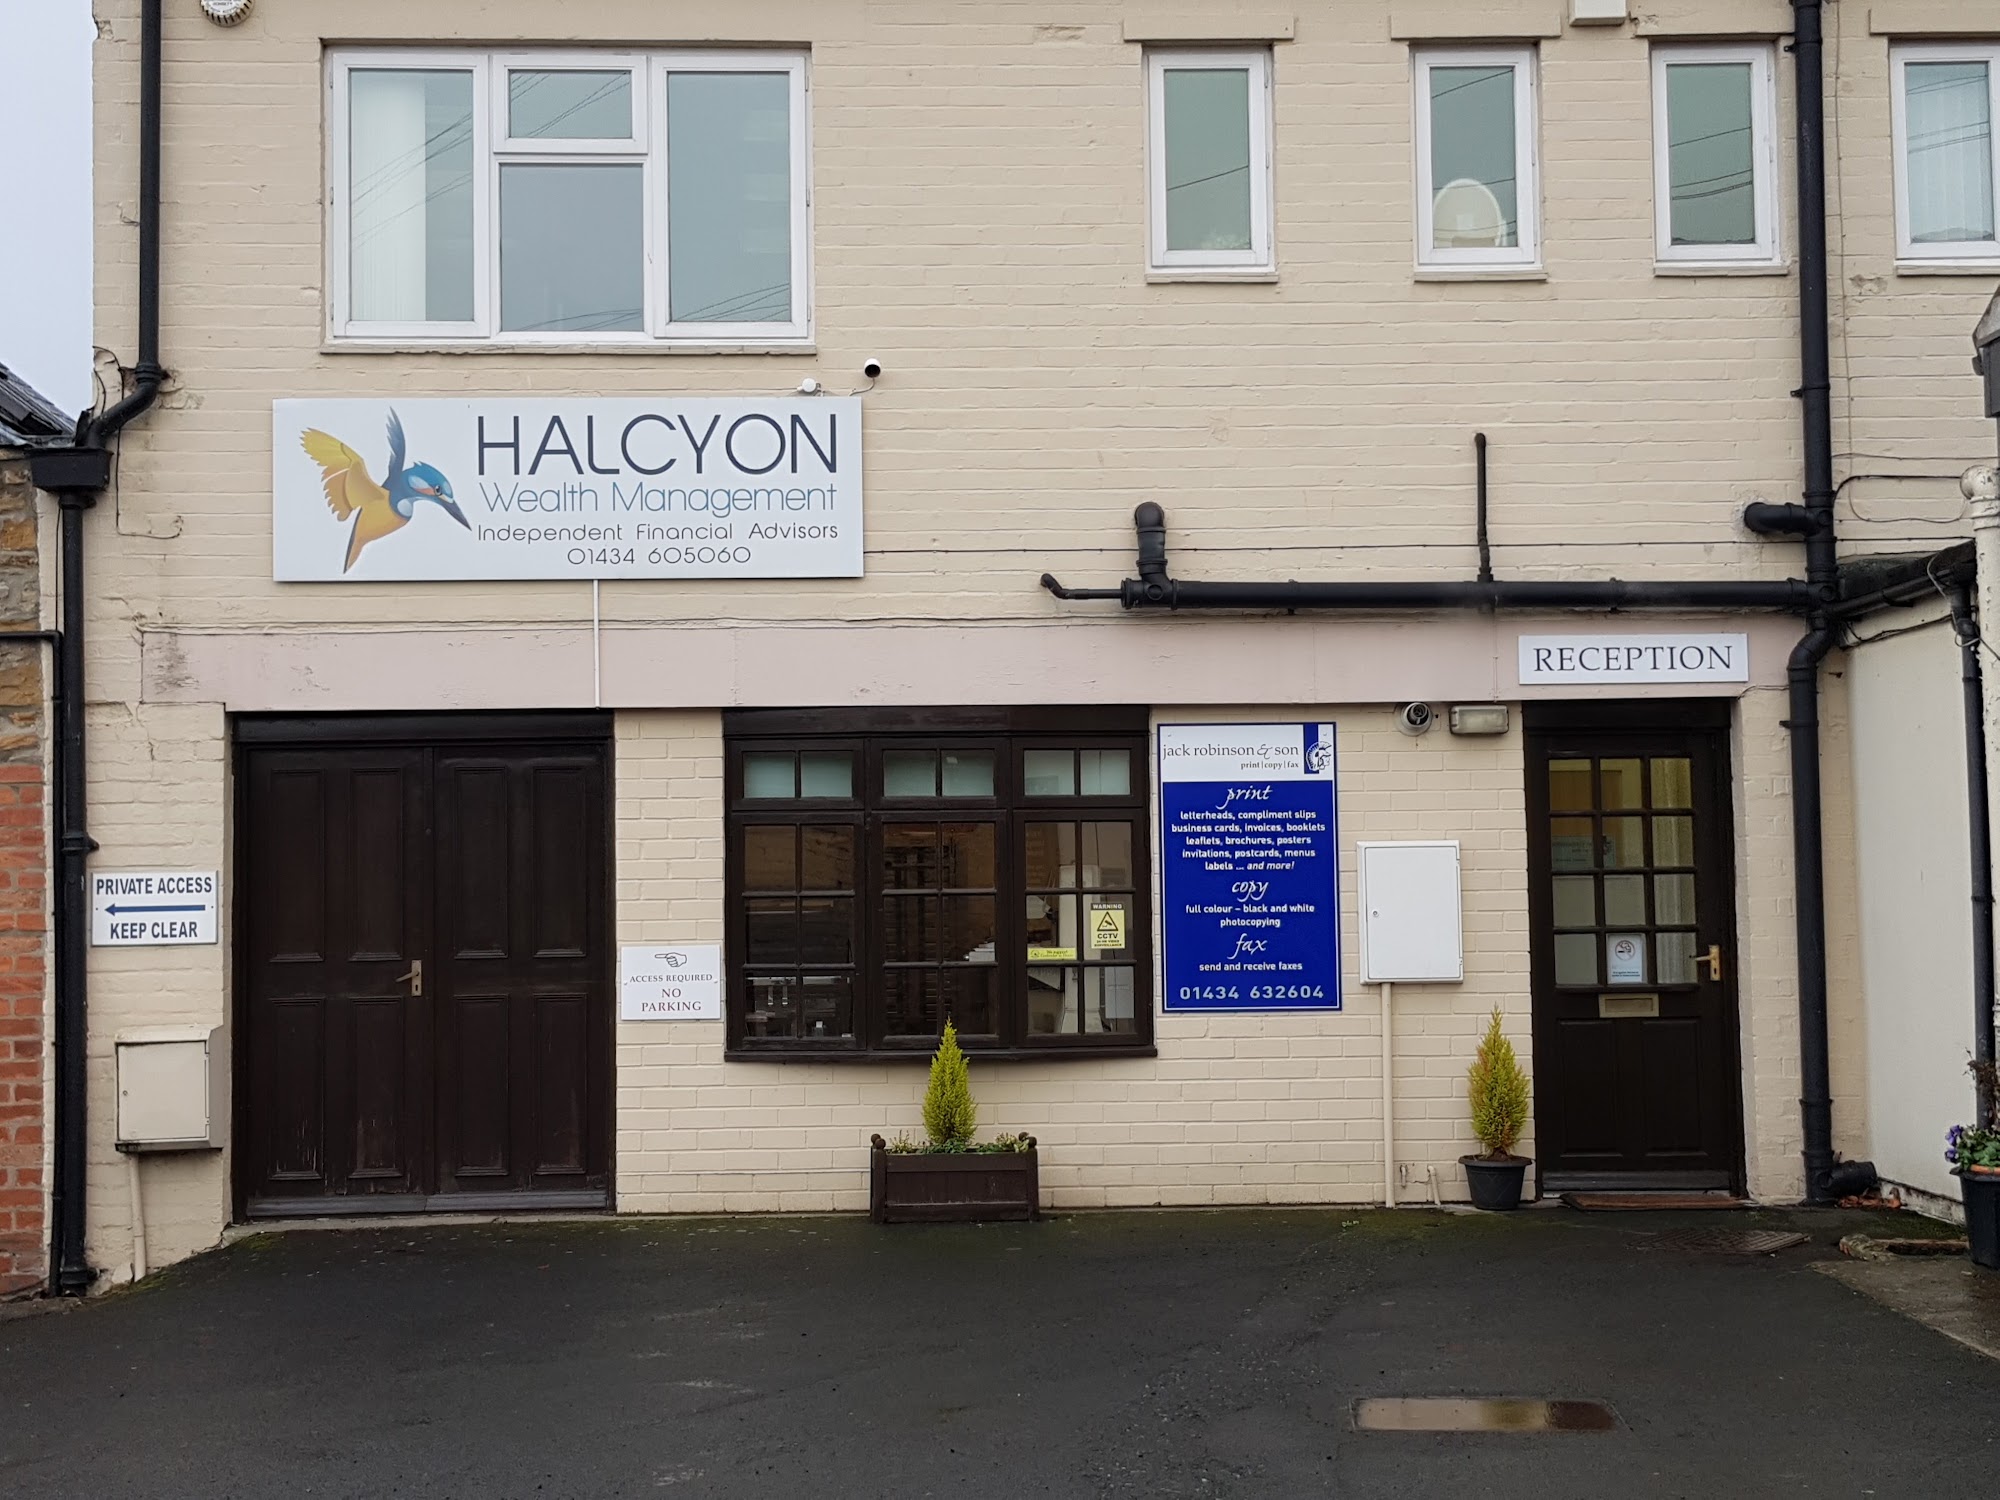 Halcyon Wealth Management Limited